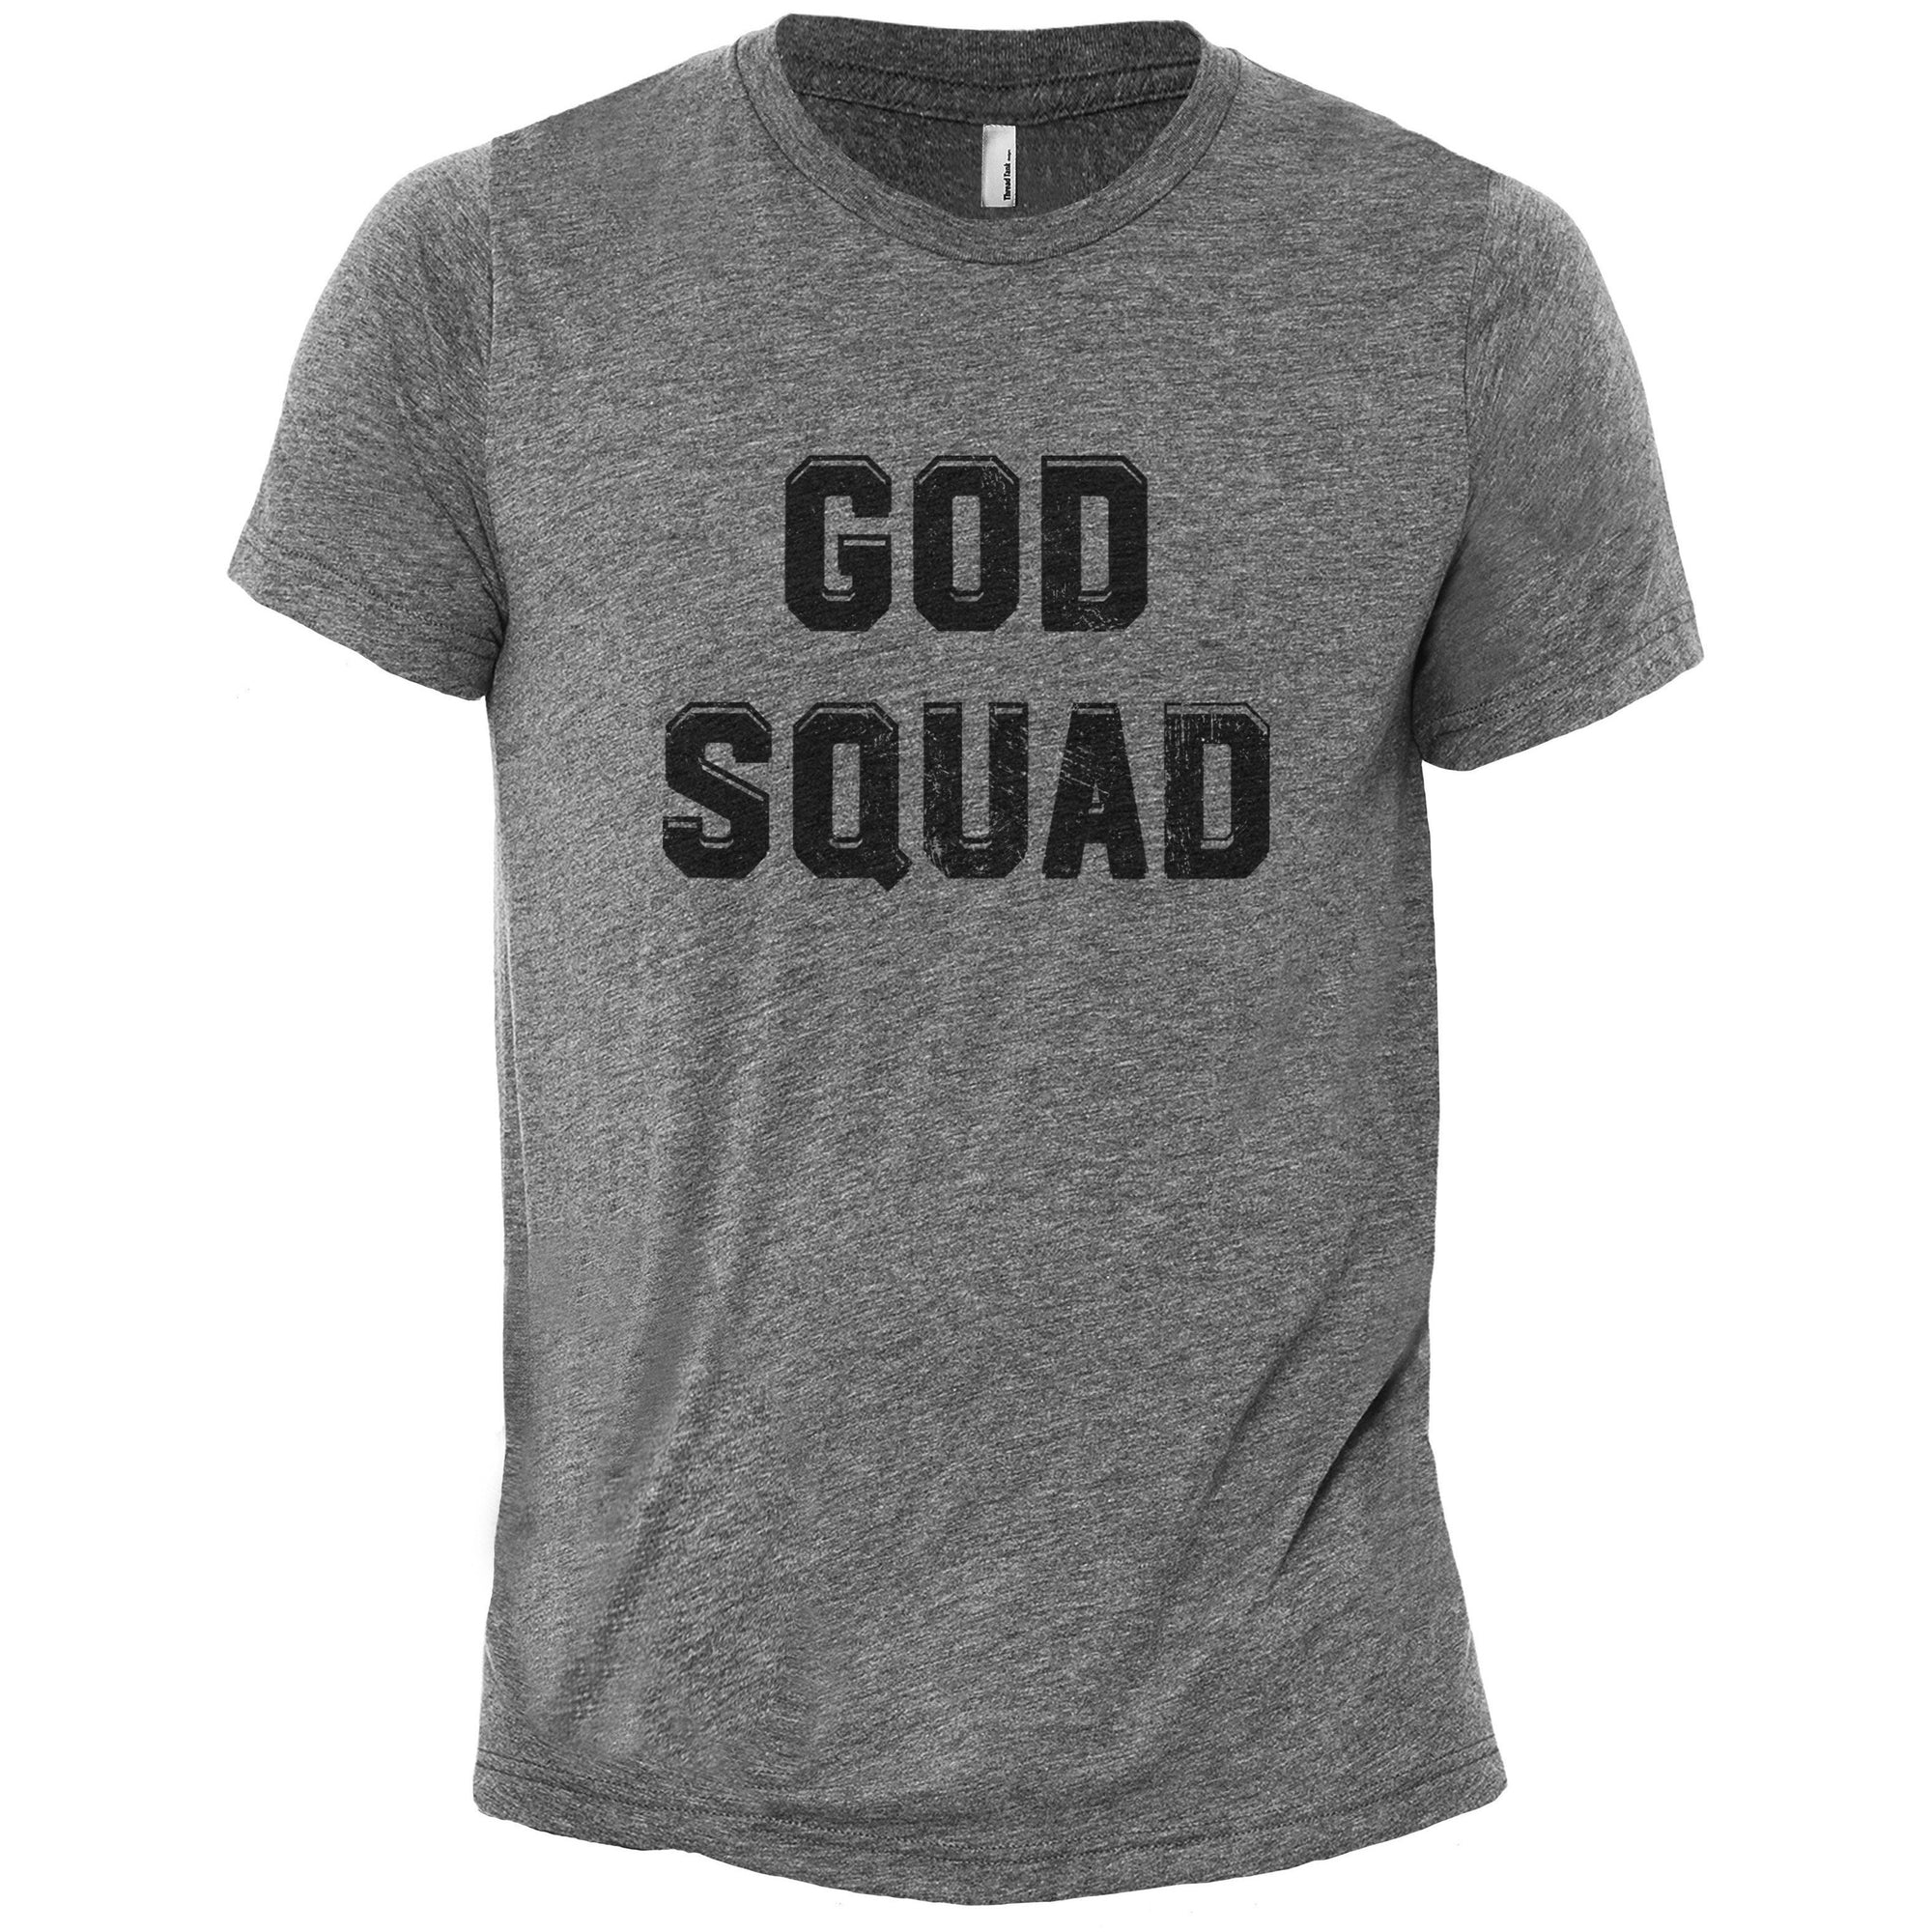 God Squad Heather Grey Printed Graphic Men's Crew T-Shirt Tee